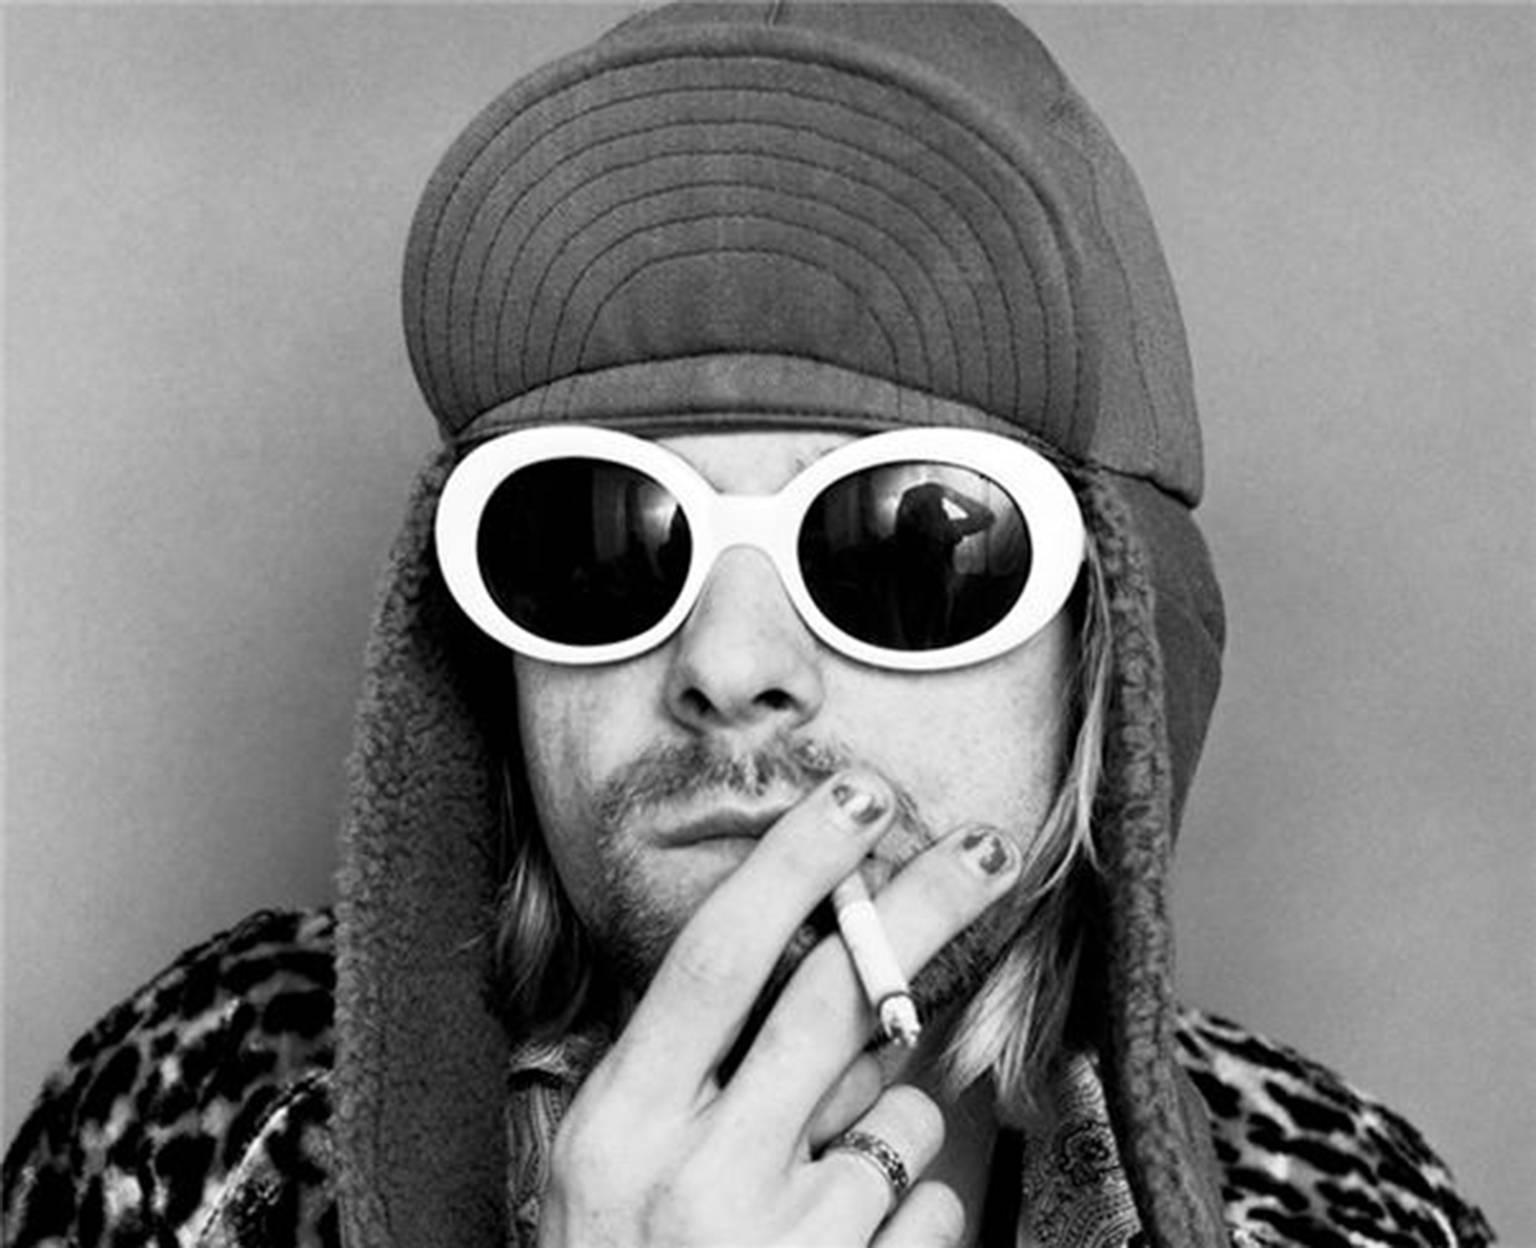 Black and White Photograph Jesse Frohman - Kurt Cobain ; Smoking C, Ver. 2